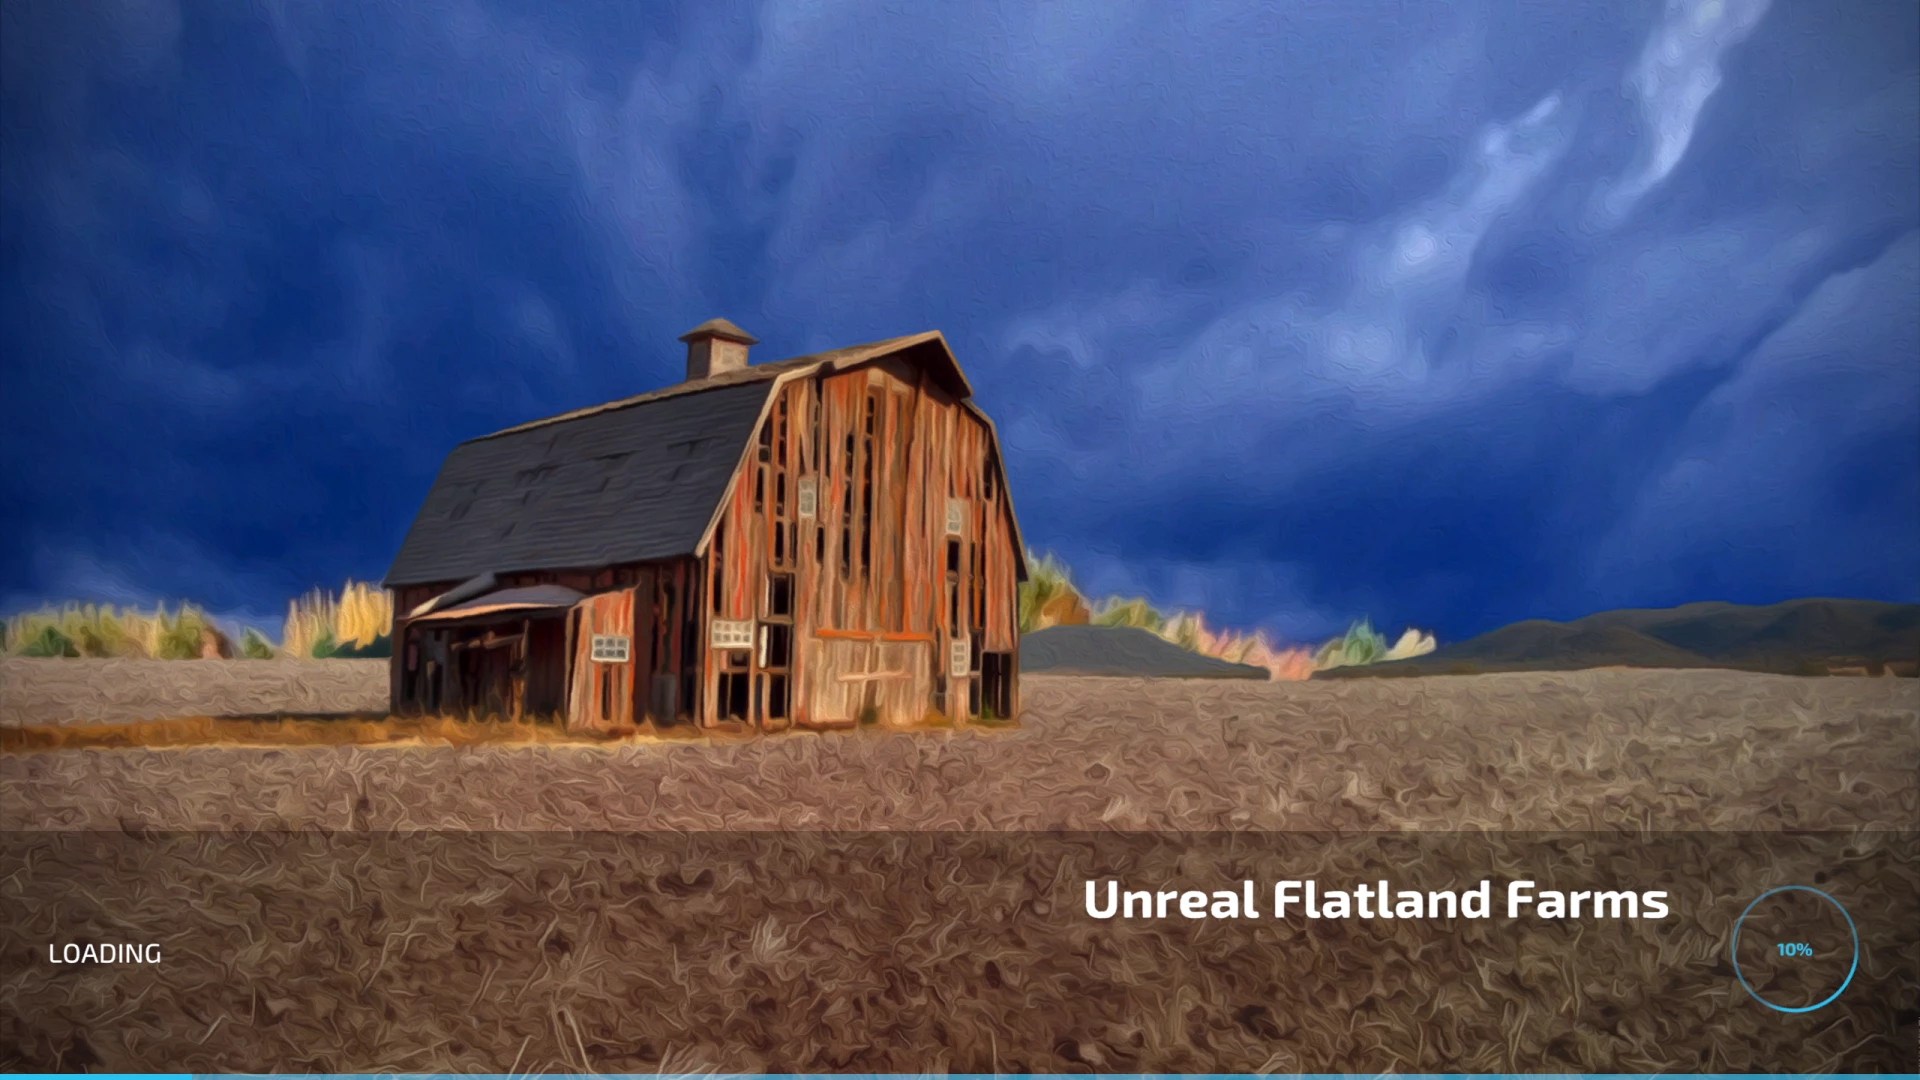 My New Map "Unreal Flatland Farms"